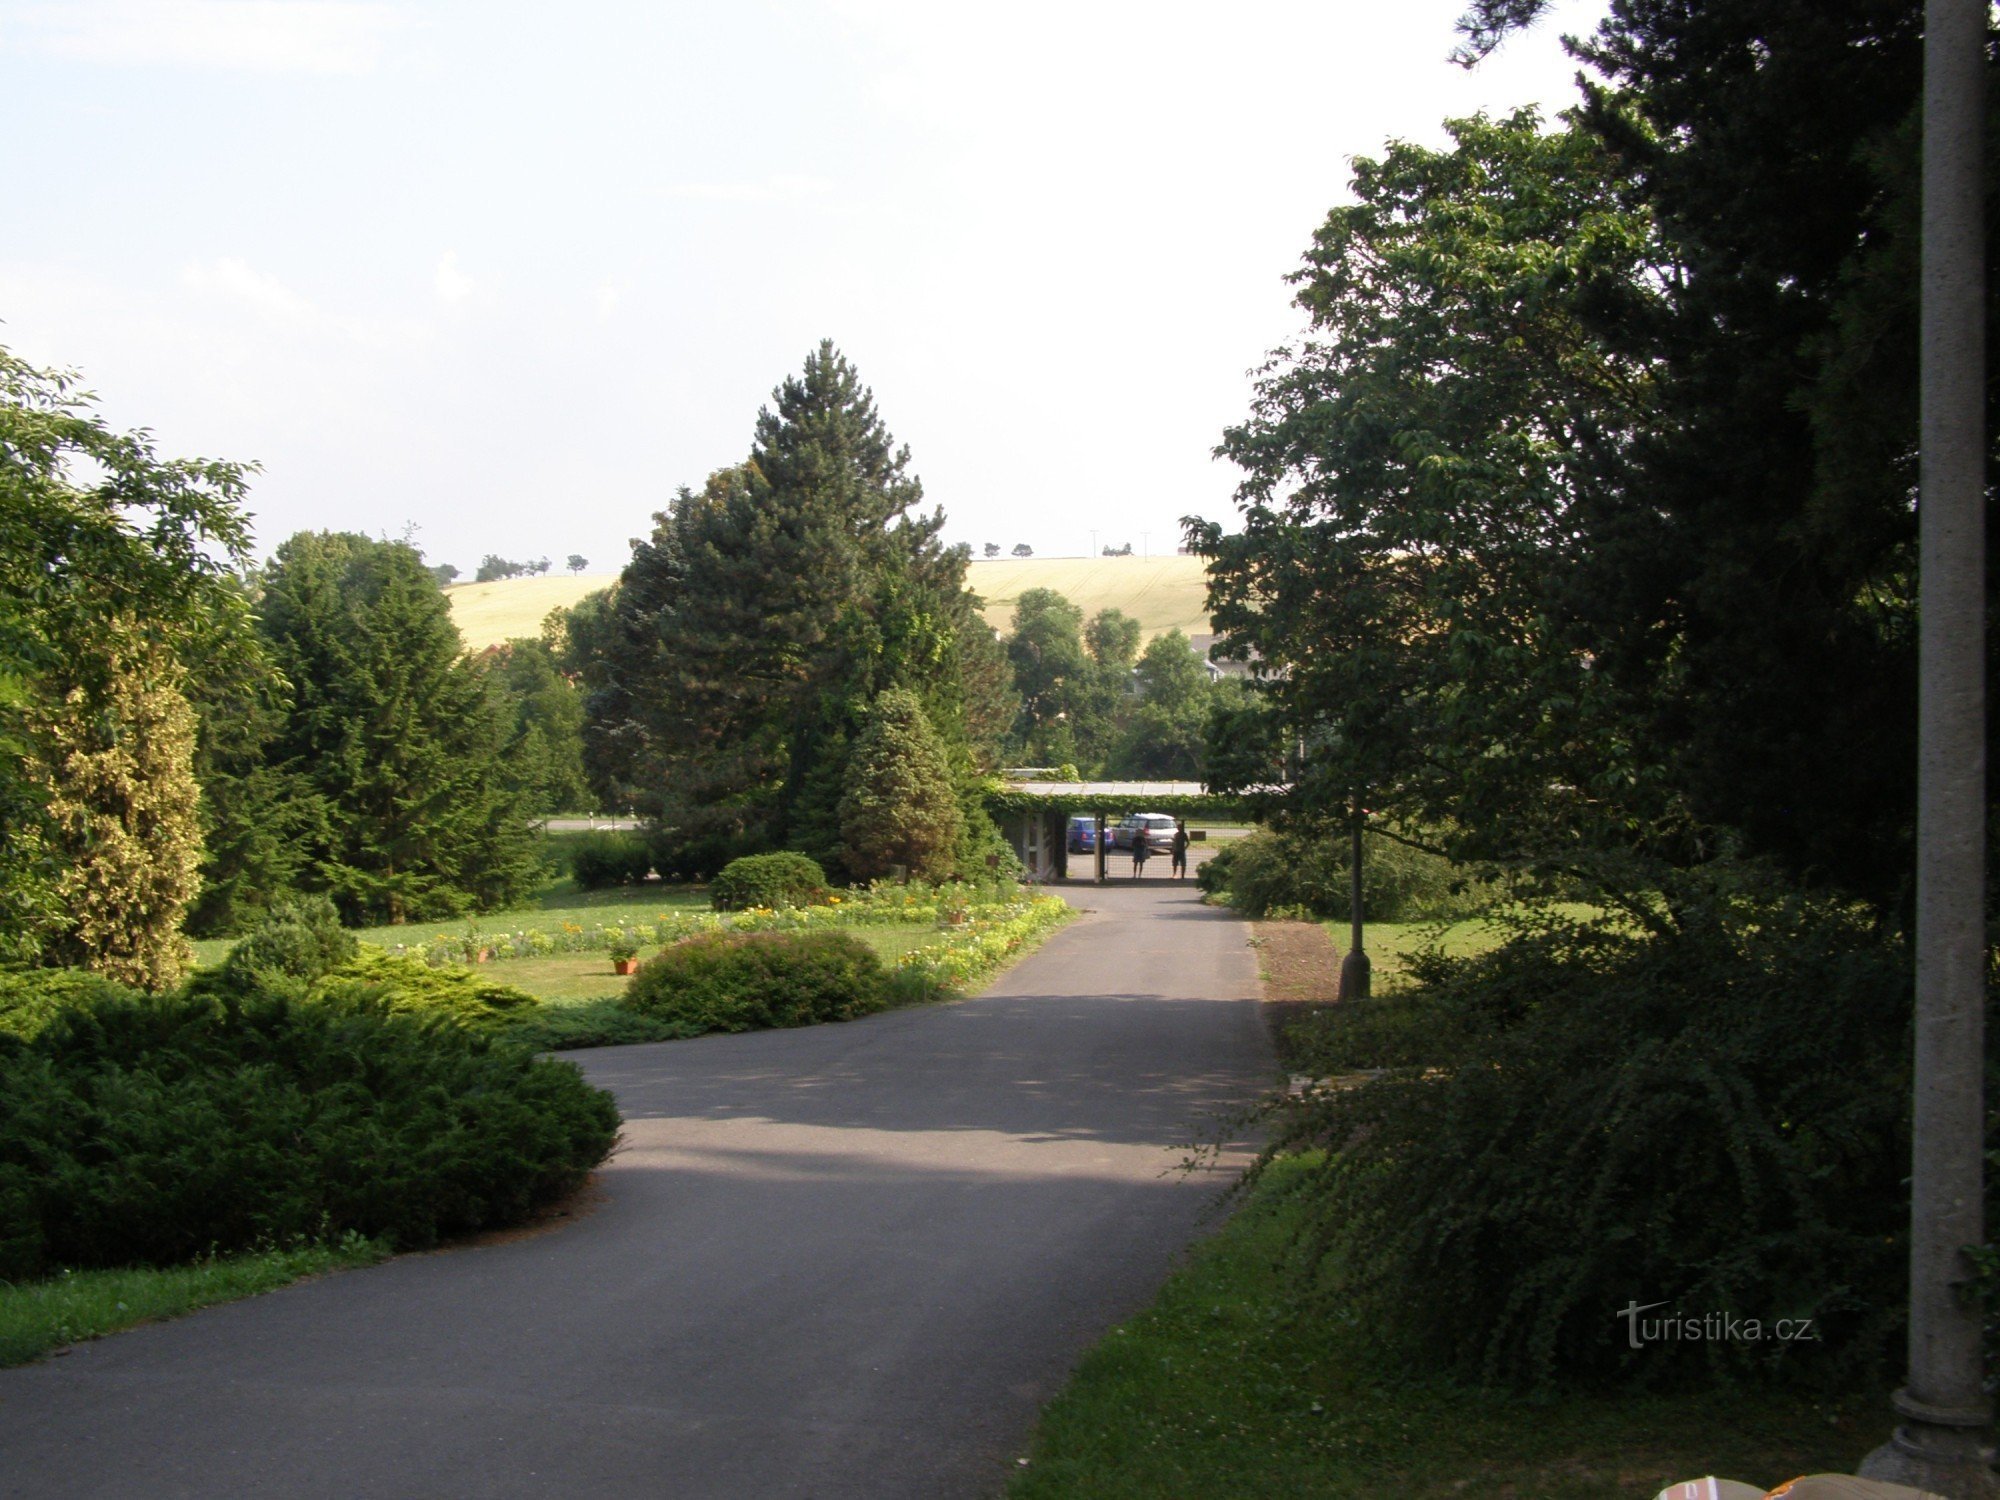 Arboretum Nový Dvůr vicino a Opava